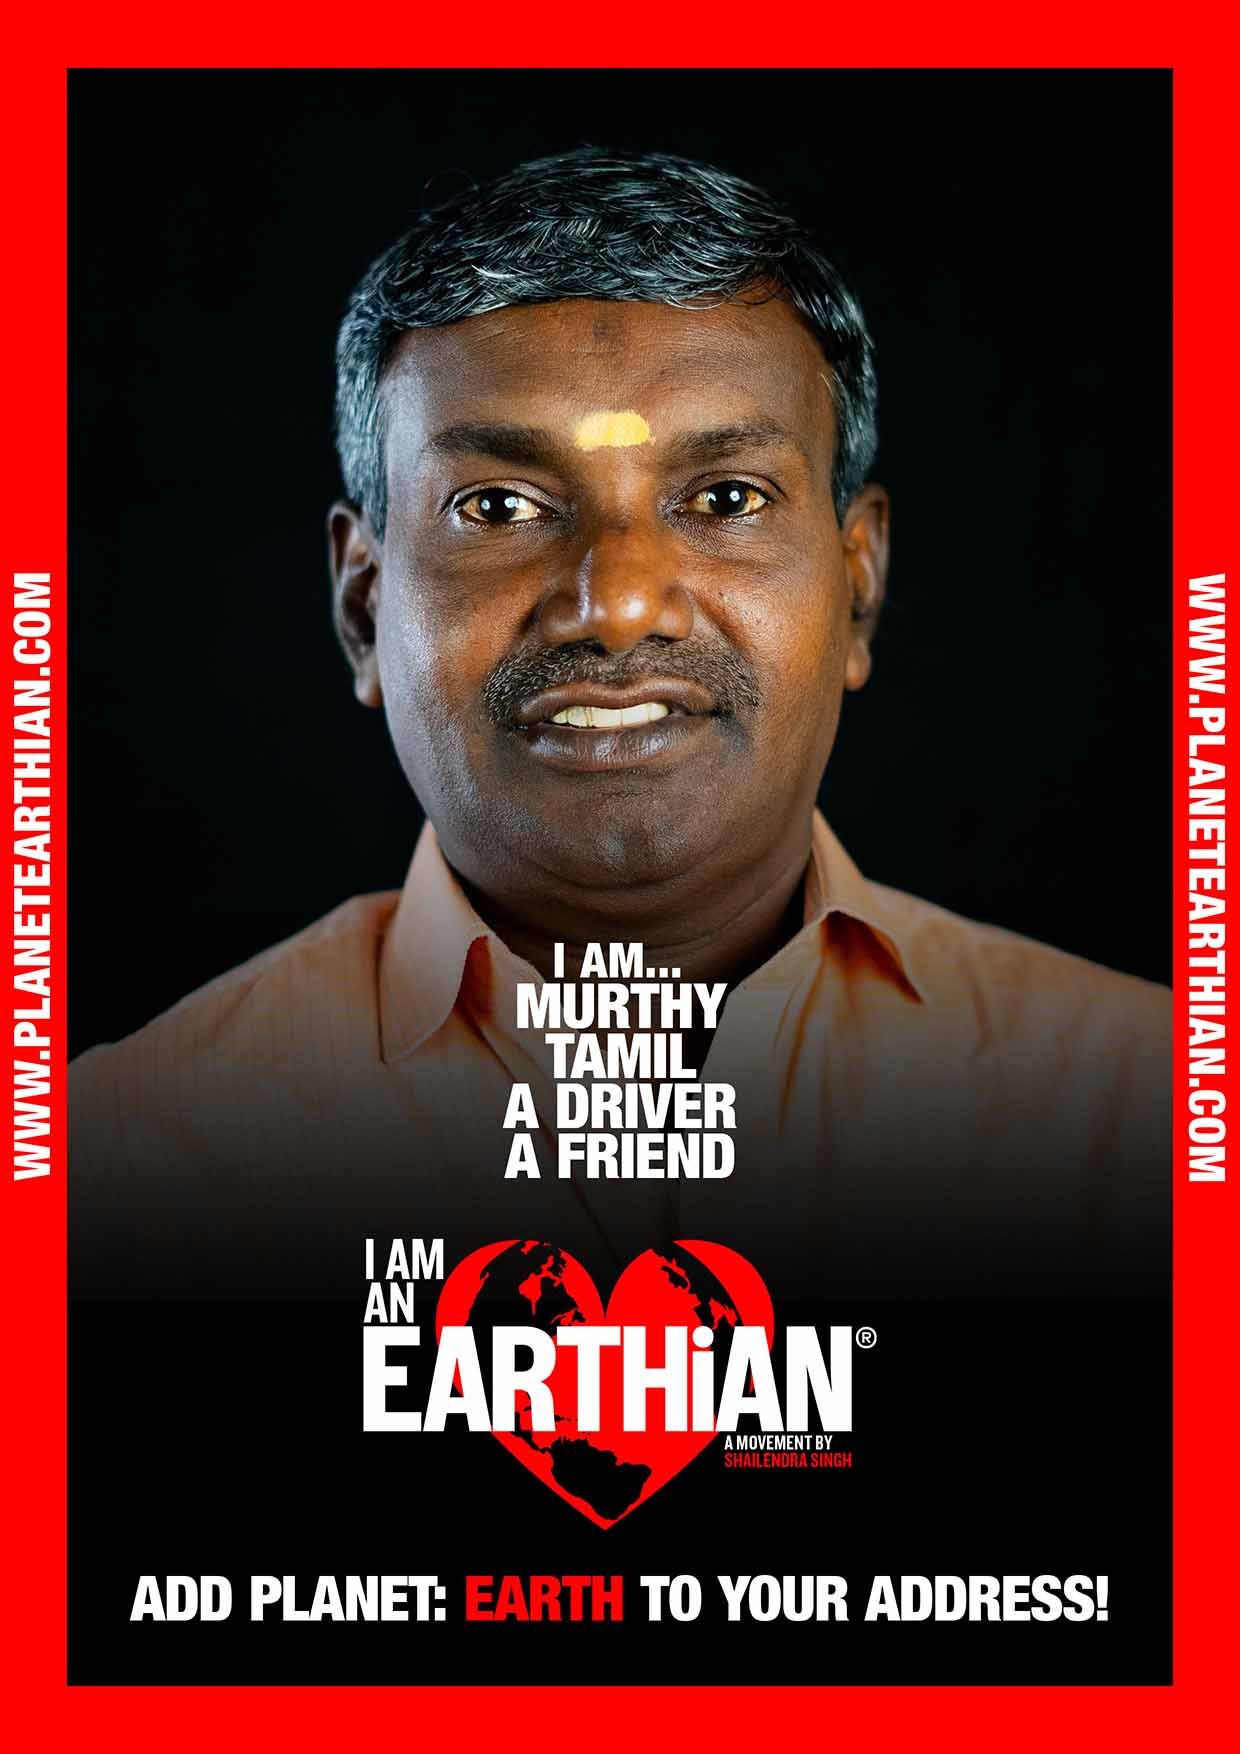 Tamil Driver Earthian